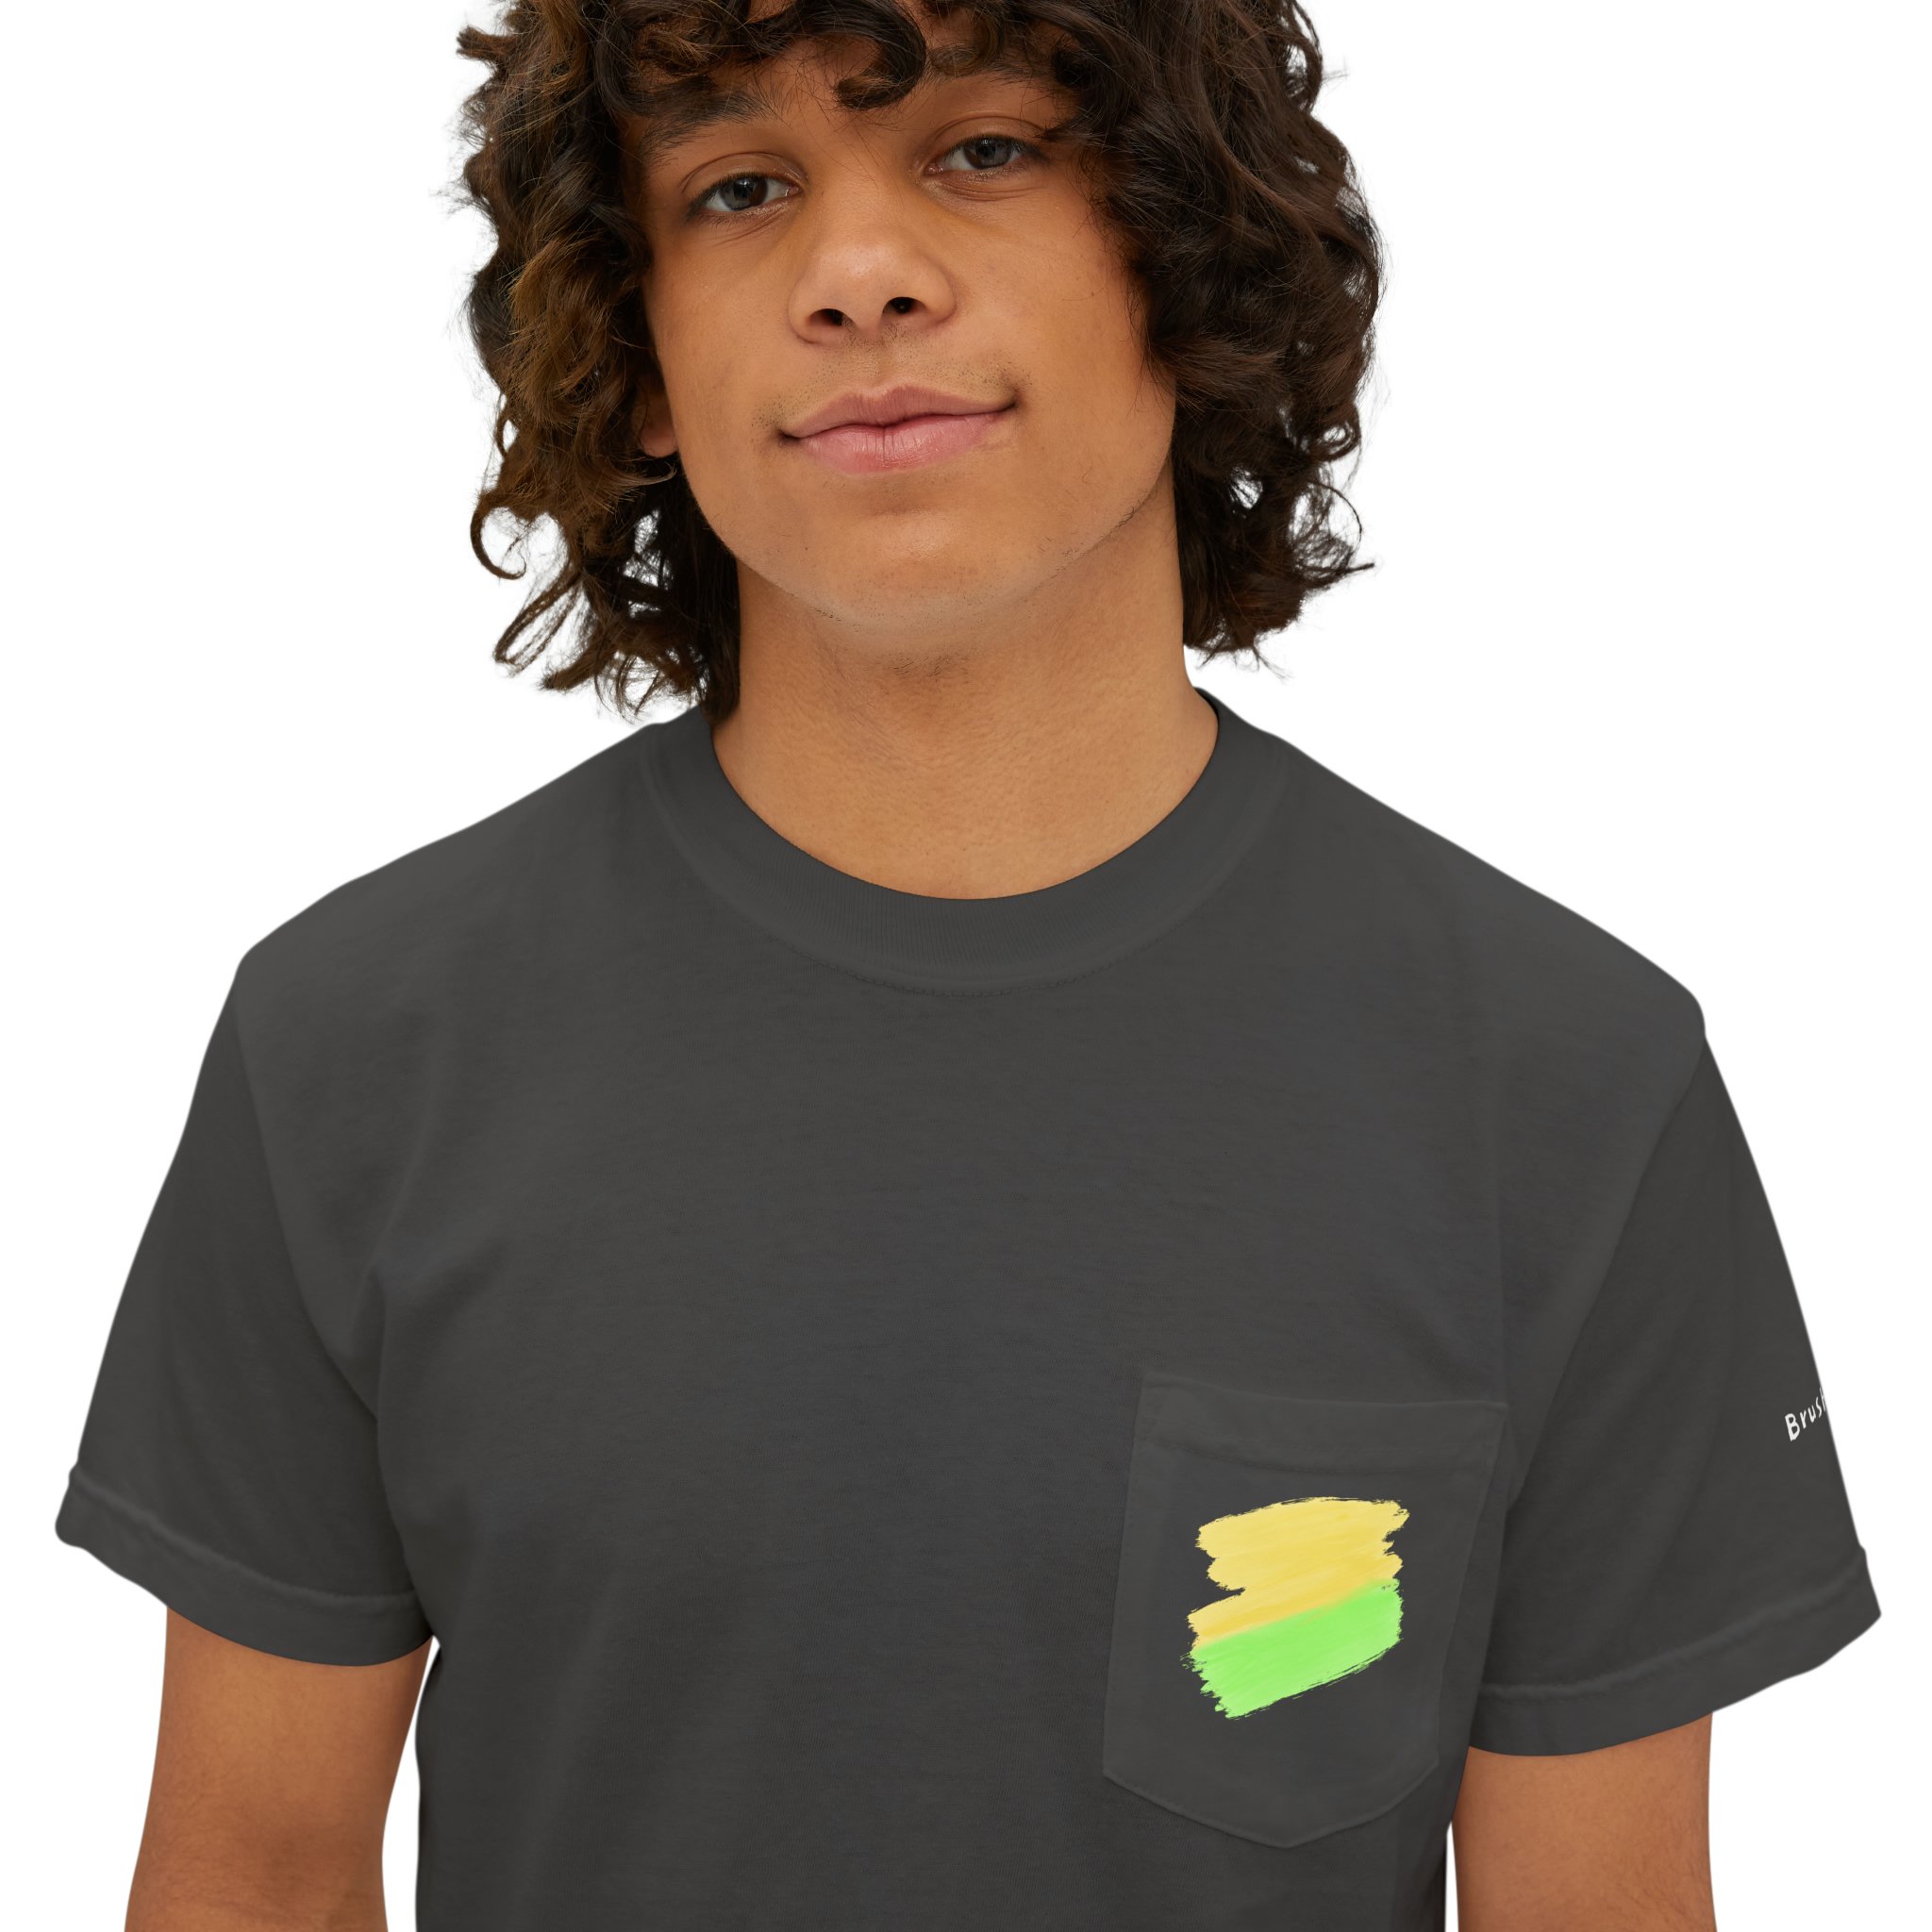 Unisex Pocket T-Shirt #8 Person 1 Closeup (1)